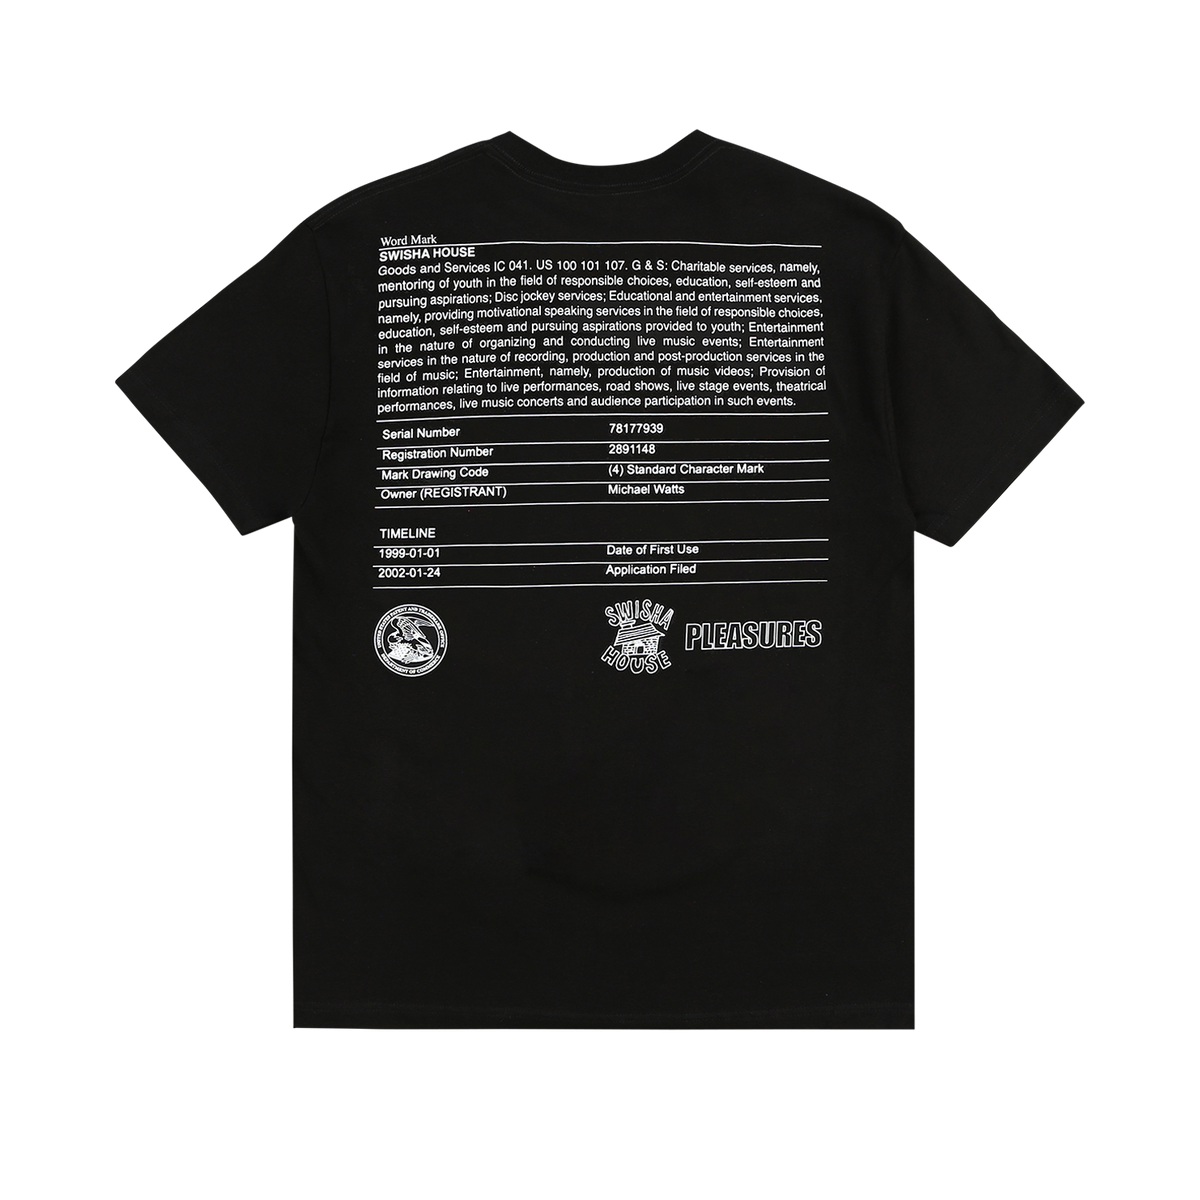 Trademark T-Shirt - Black